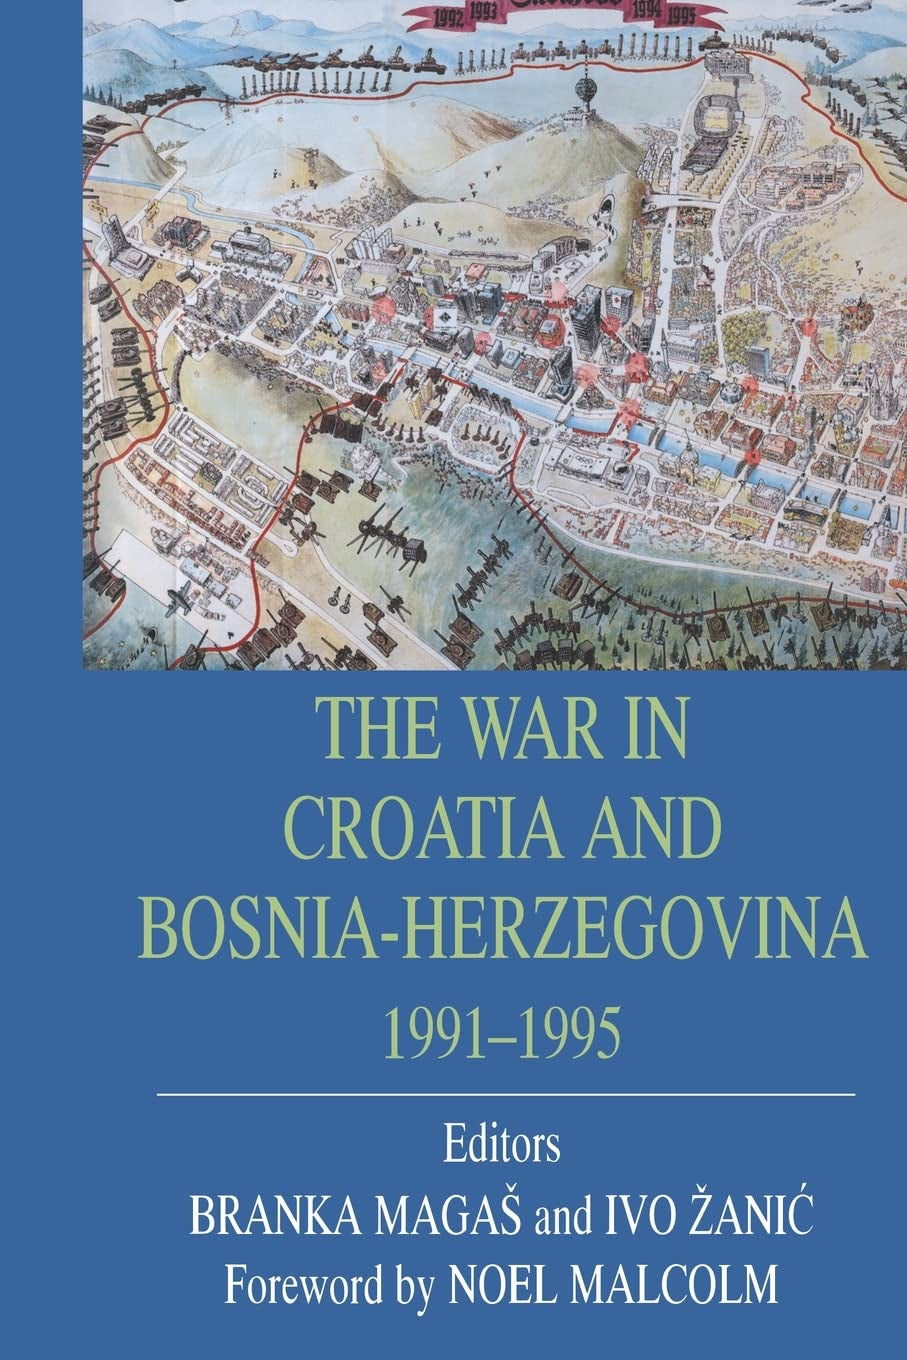 The War in Croatia and Bosnia-Herzegovina: 1991-1995